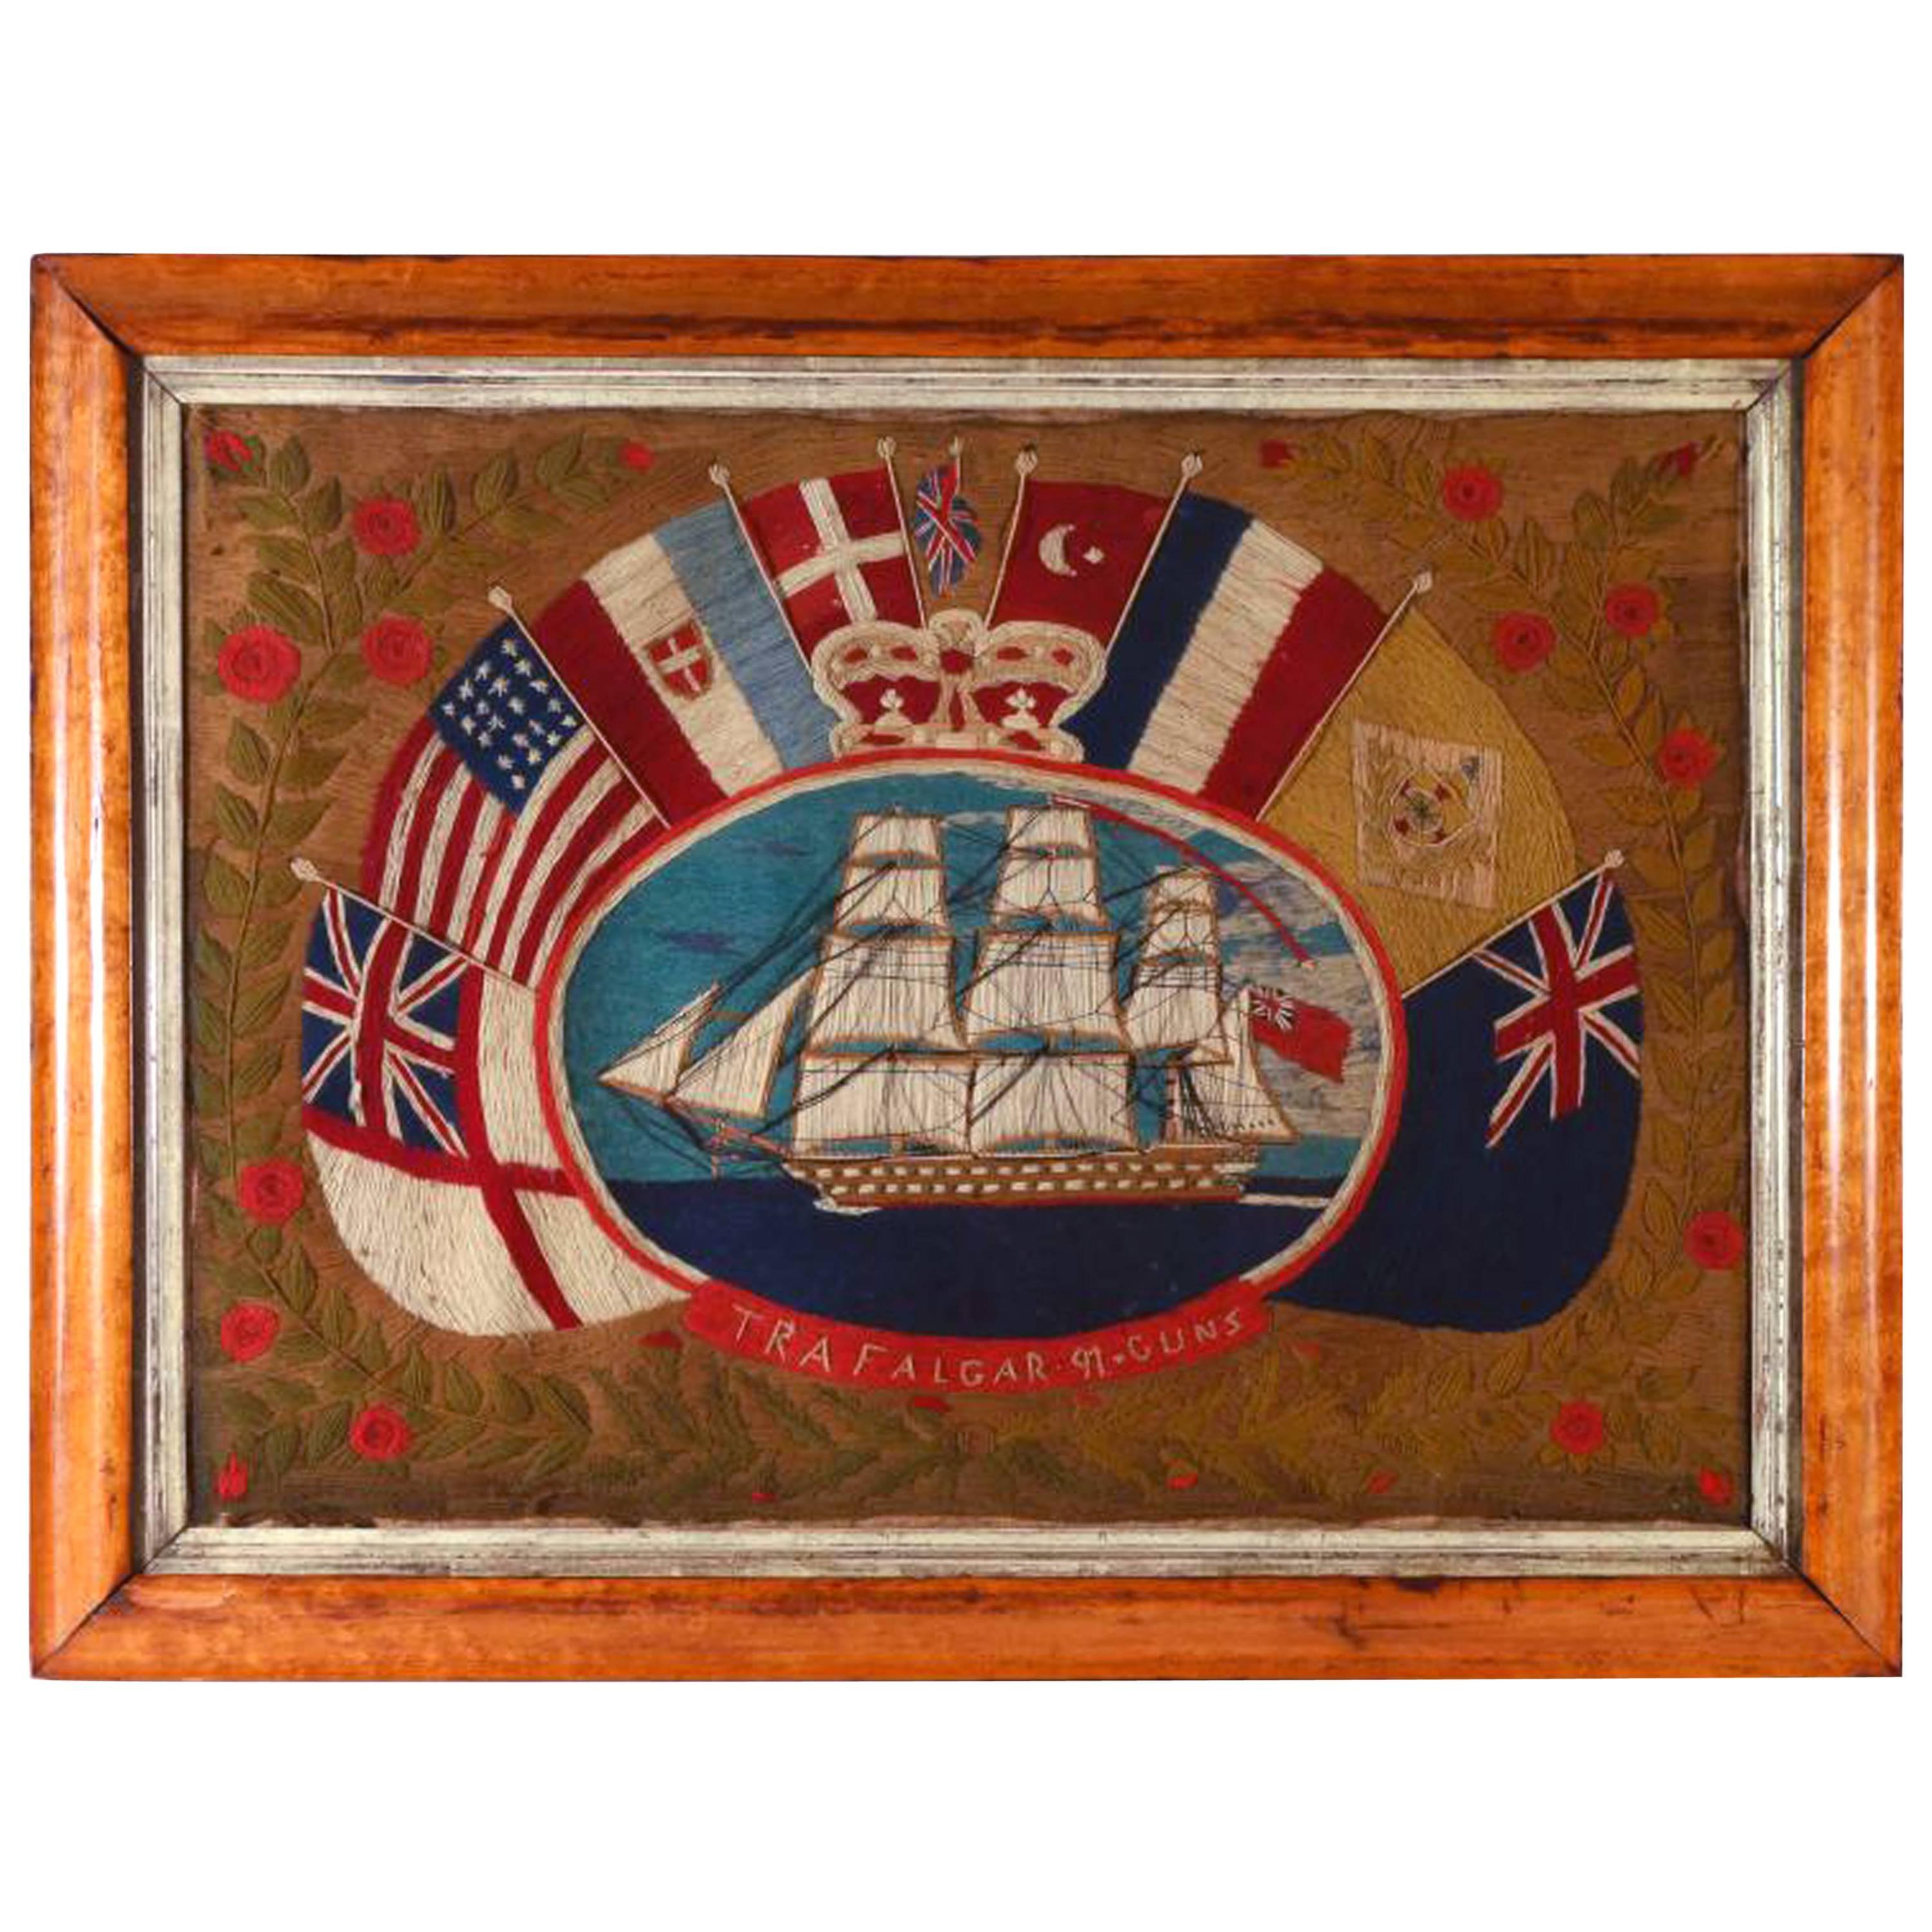 British Sailor's Flag of Nations Woolwork, HMS Trafalgar, 91 Guns, circa 1865